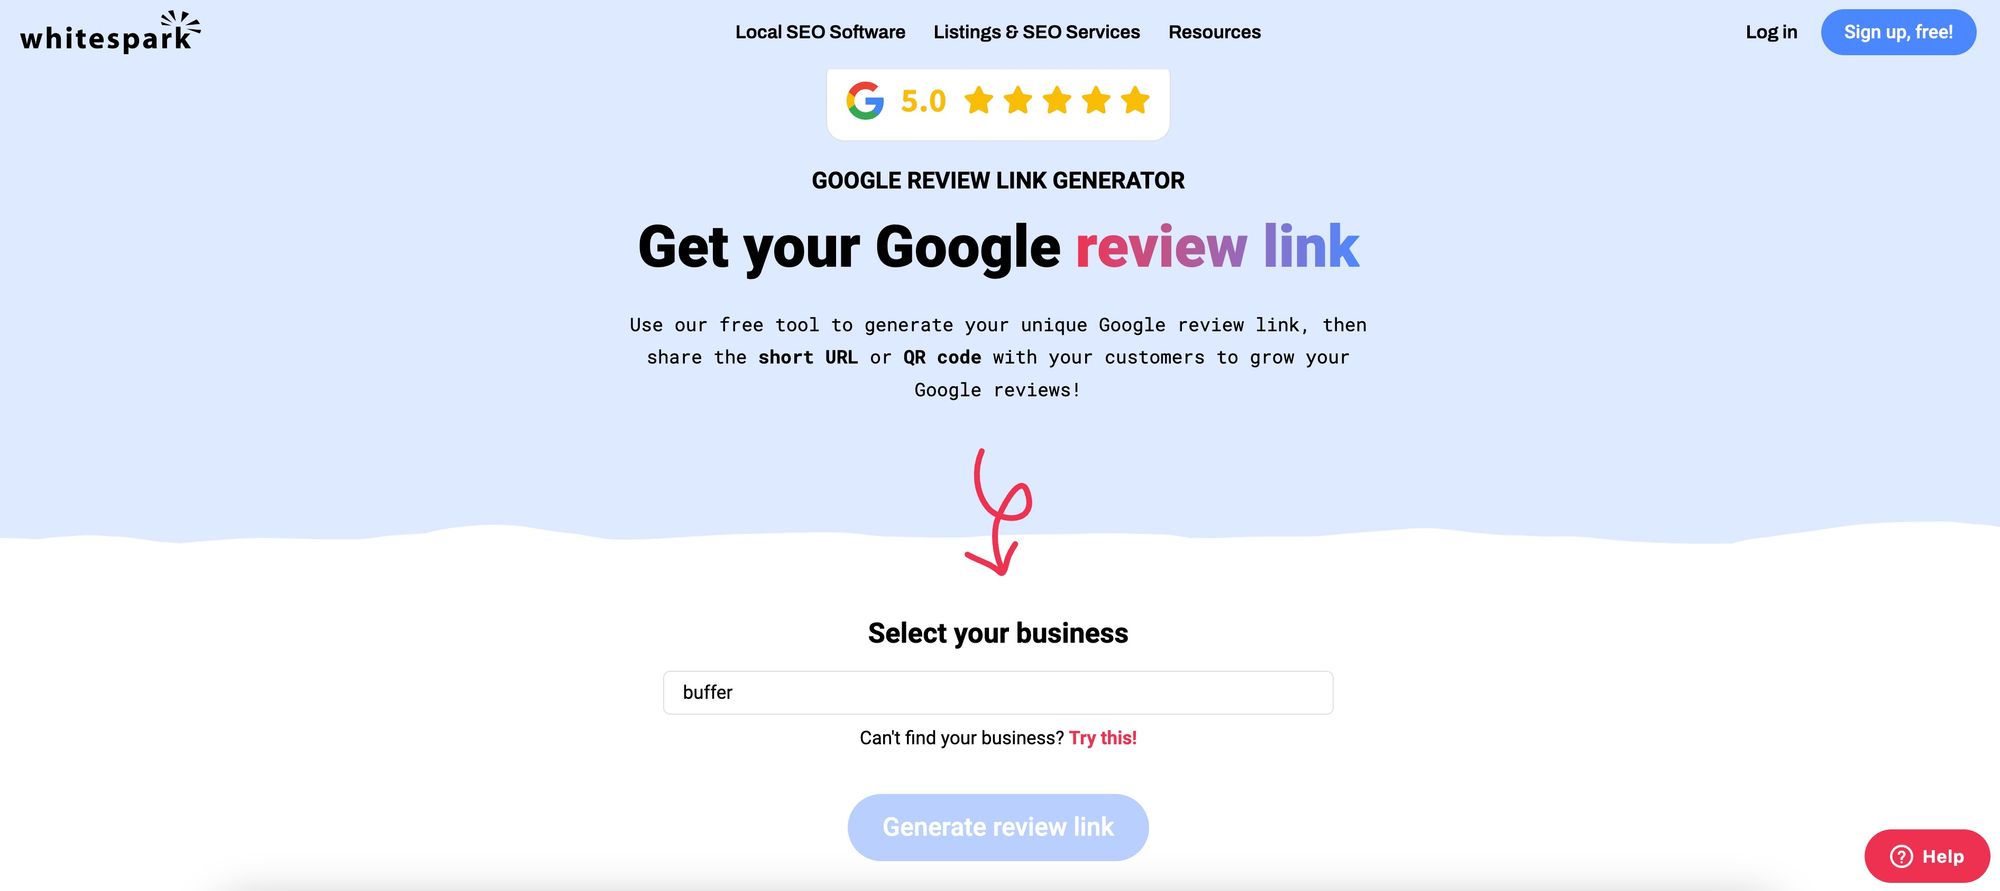 whitespark google review link generator